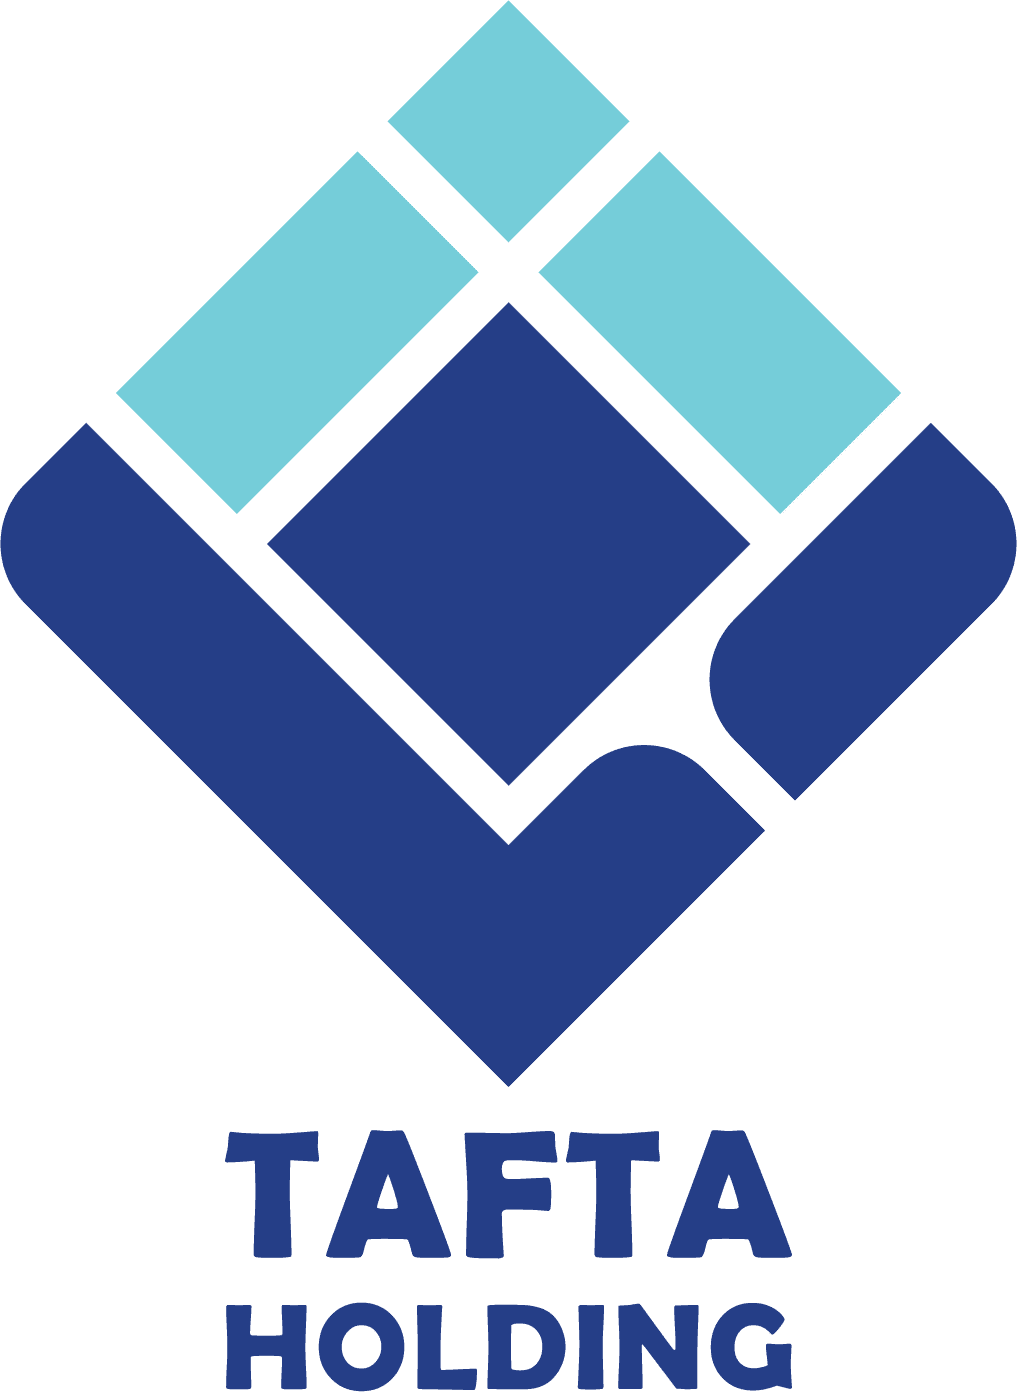 introduction of Tafta